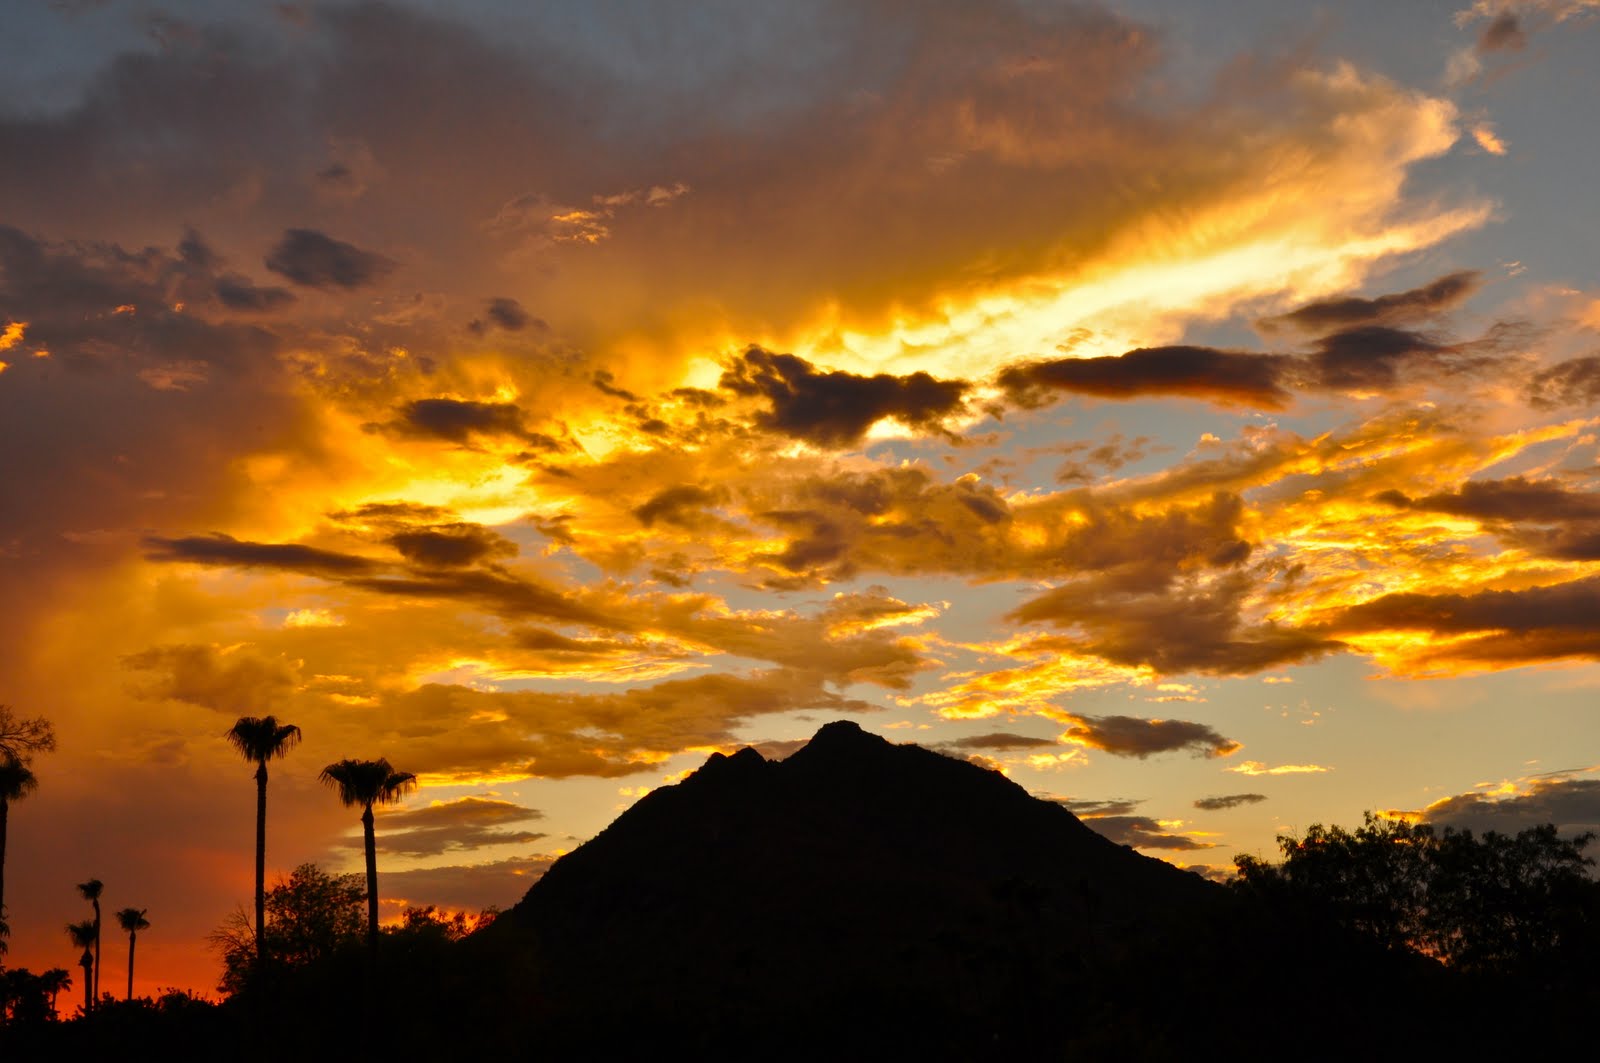 Sunset over Scottsdale, Arizona, showcasing the breathtaking beauty of Colleen's Dream.